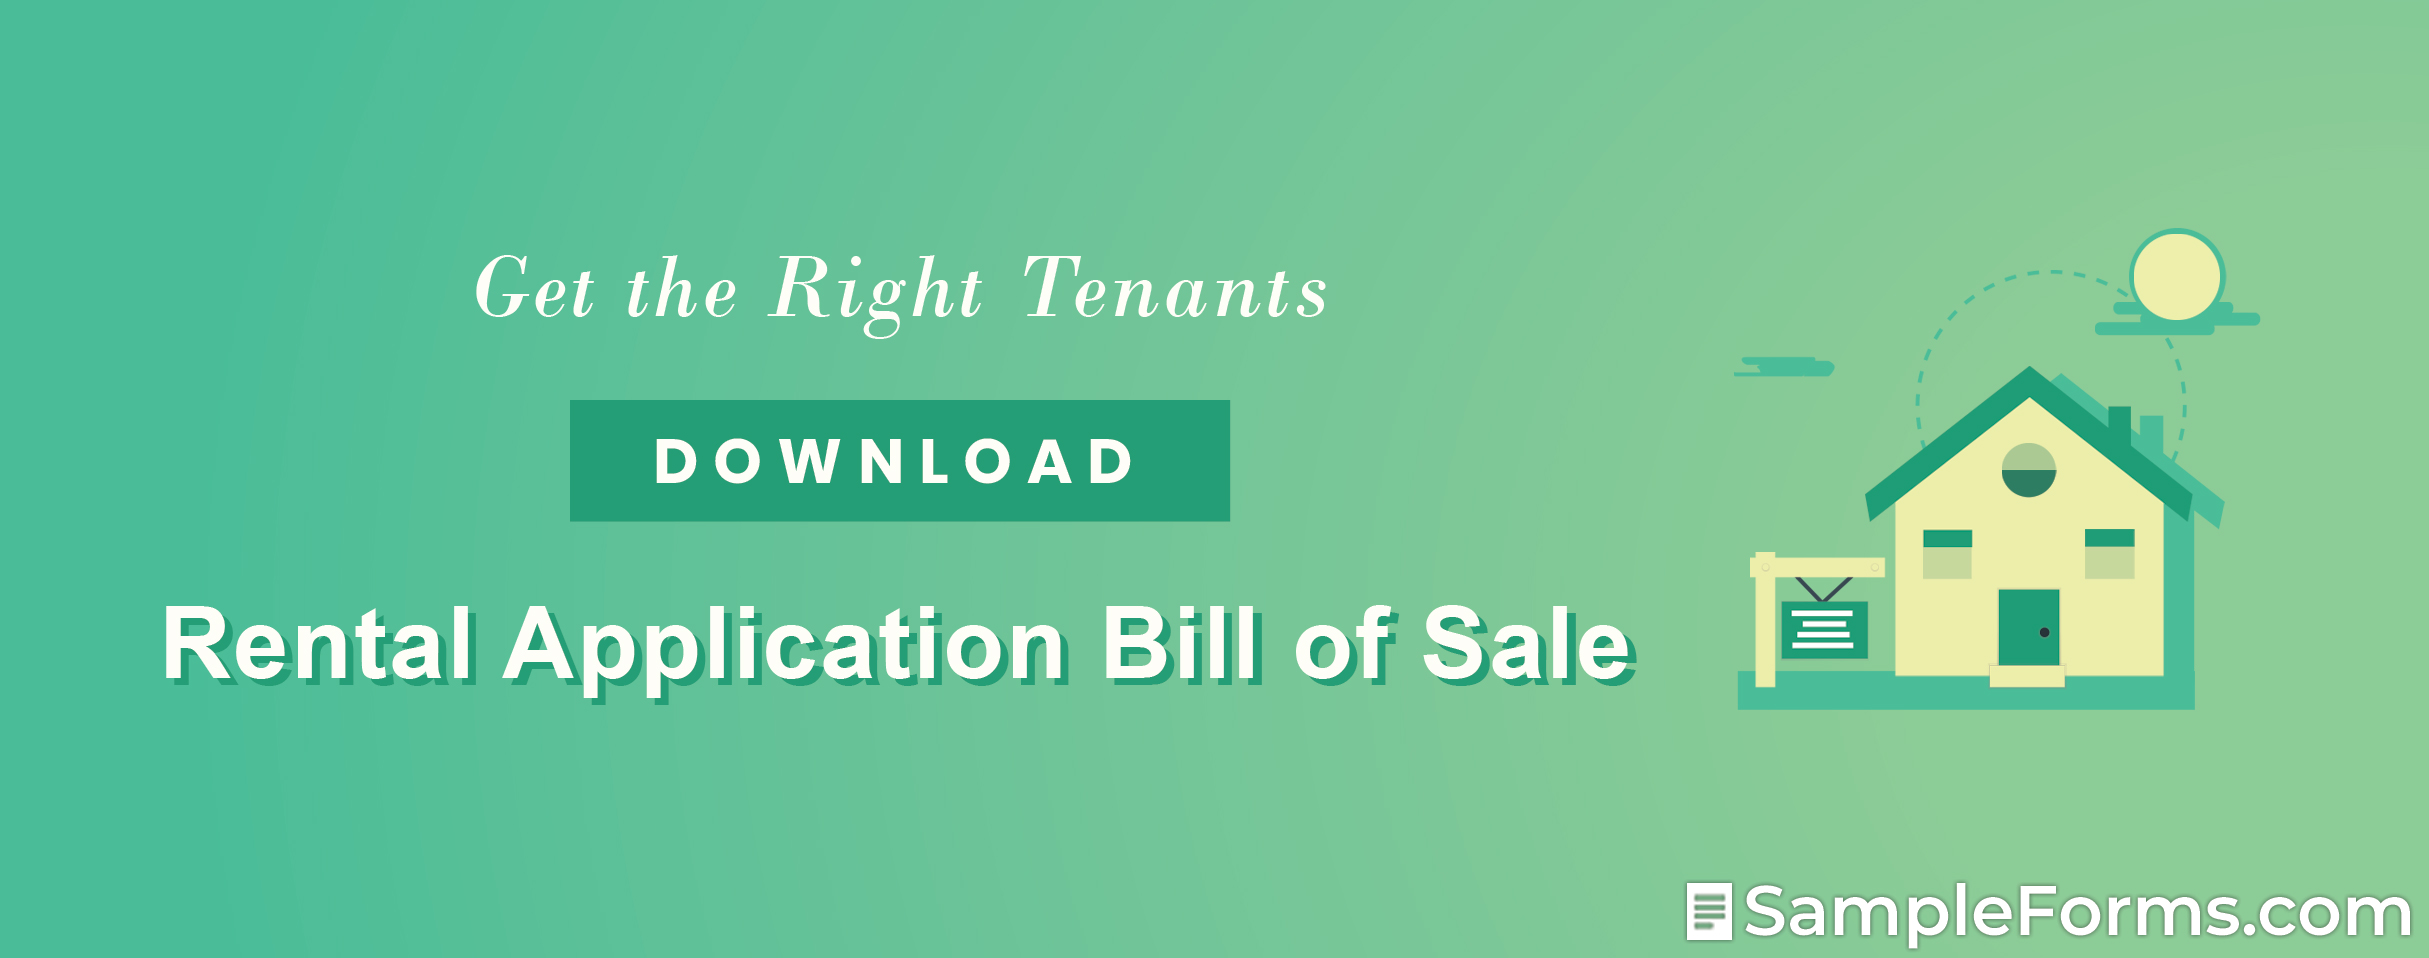 Rental Application Bill of Sale Form